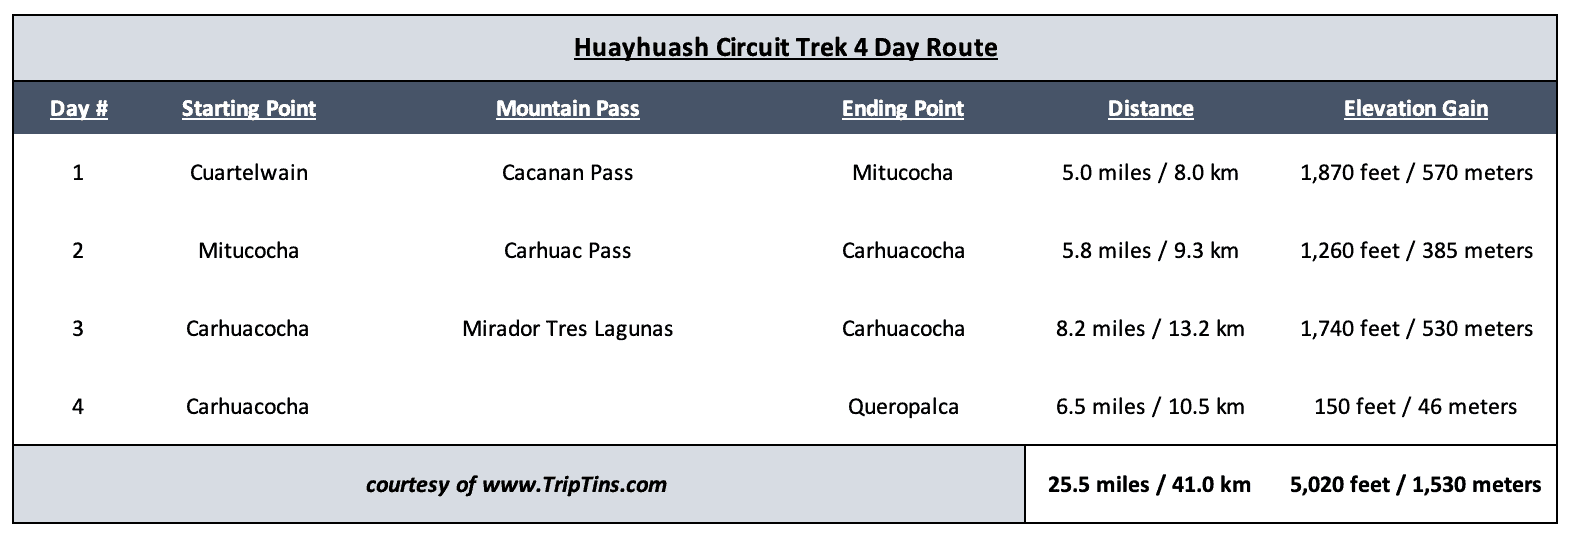 Huayhuash Circuit 4 Day